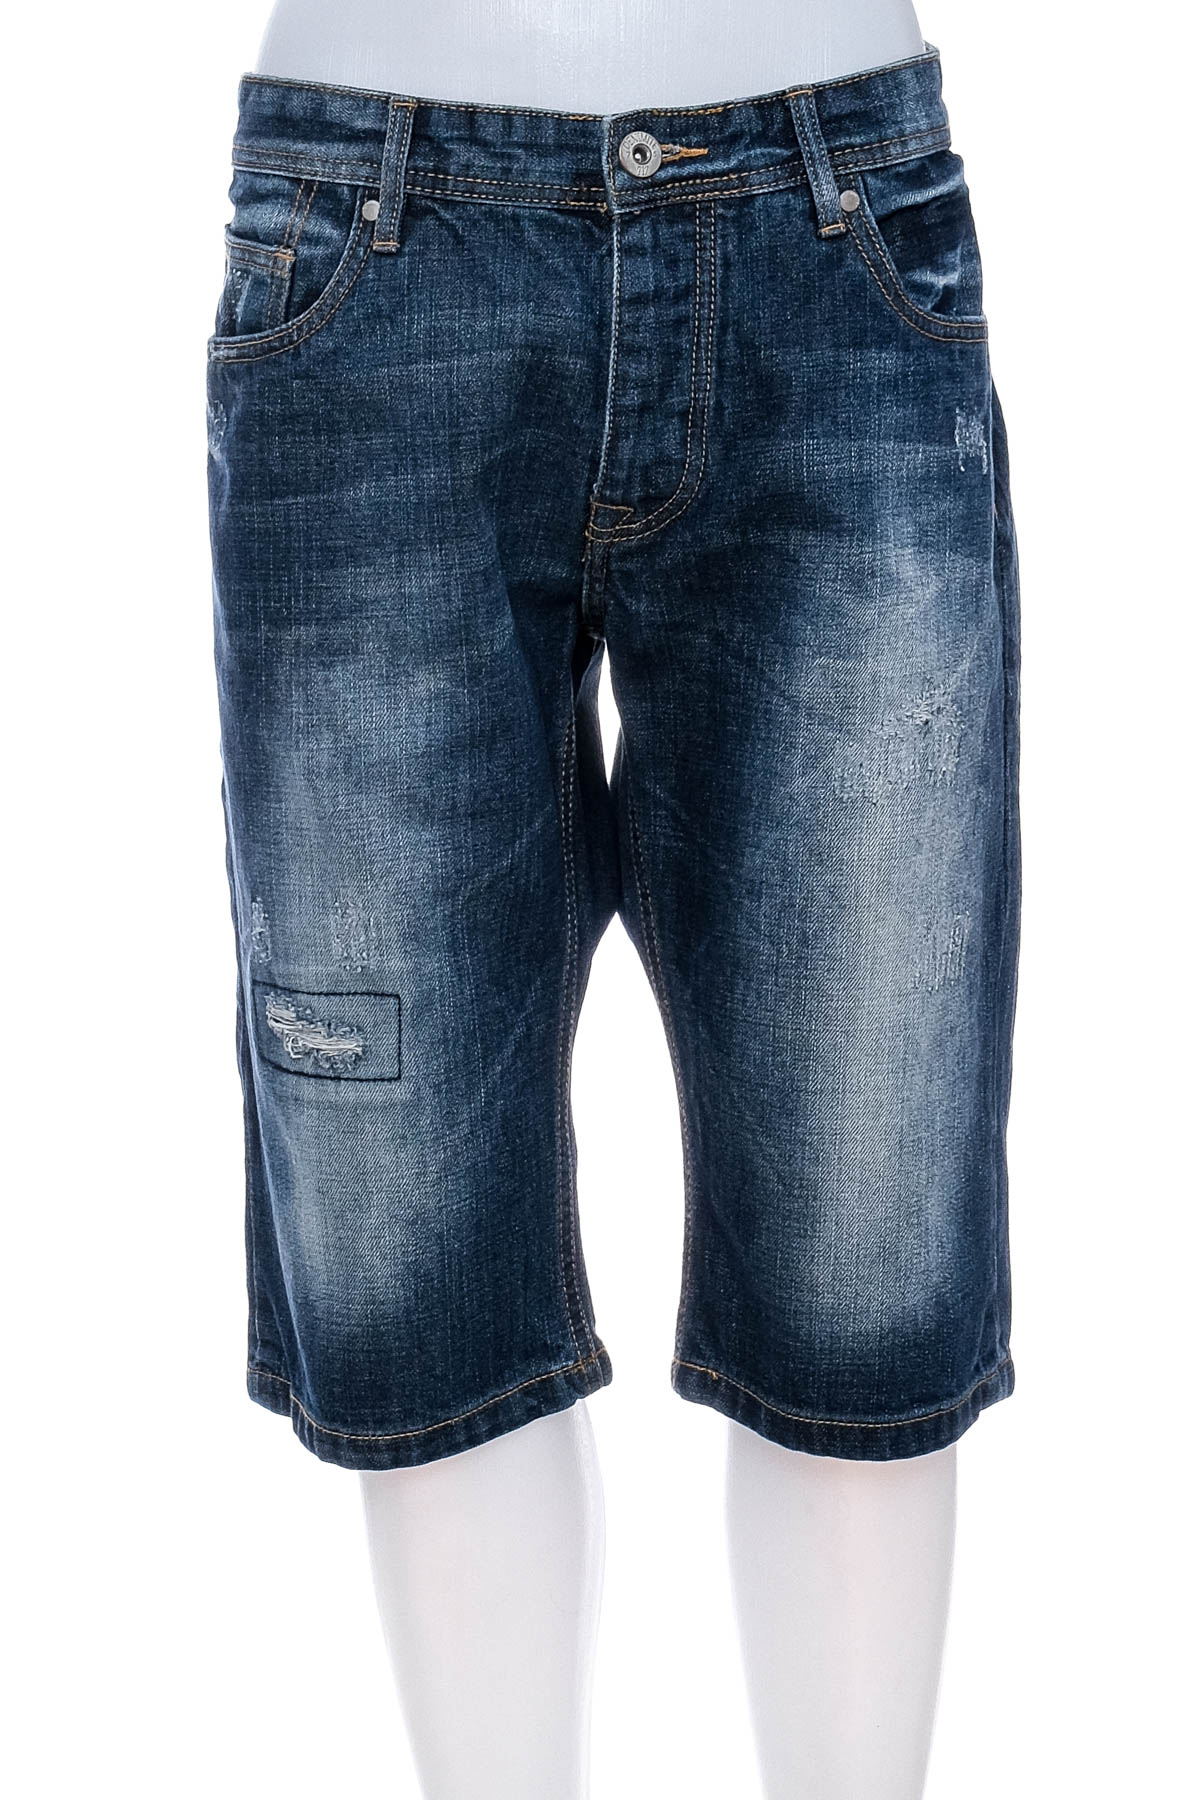 Men's shorts - CKH Denim - 0